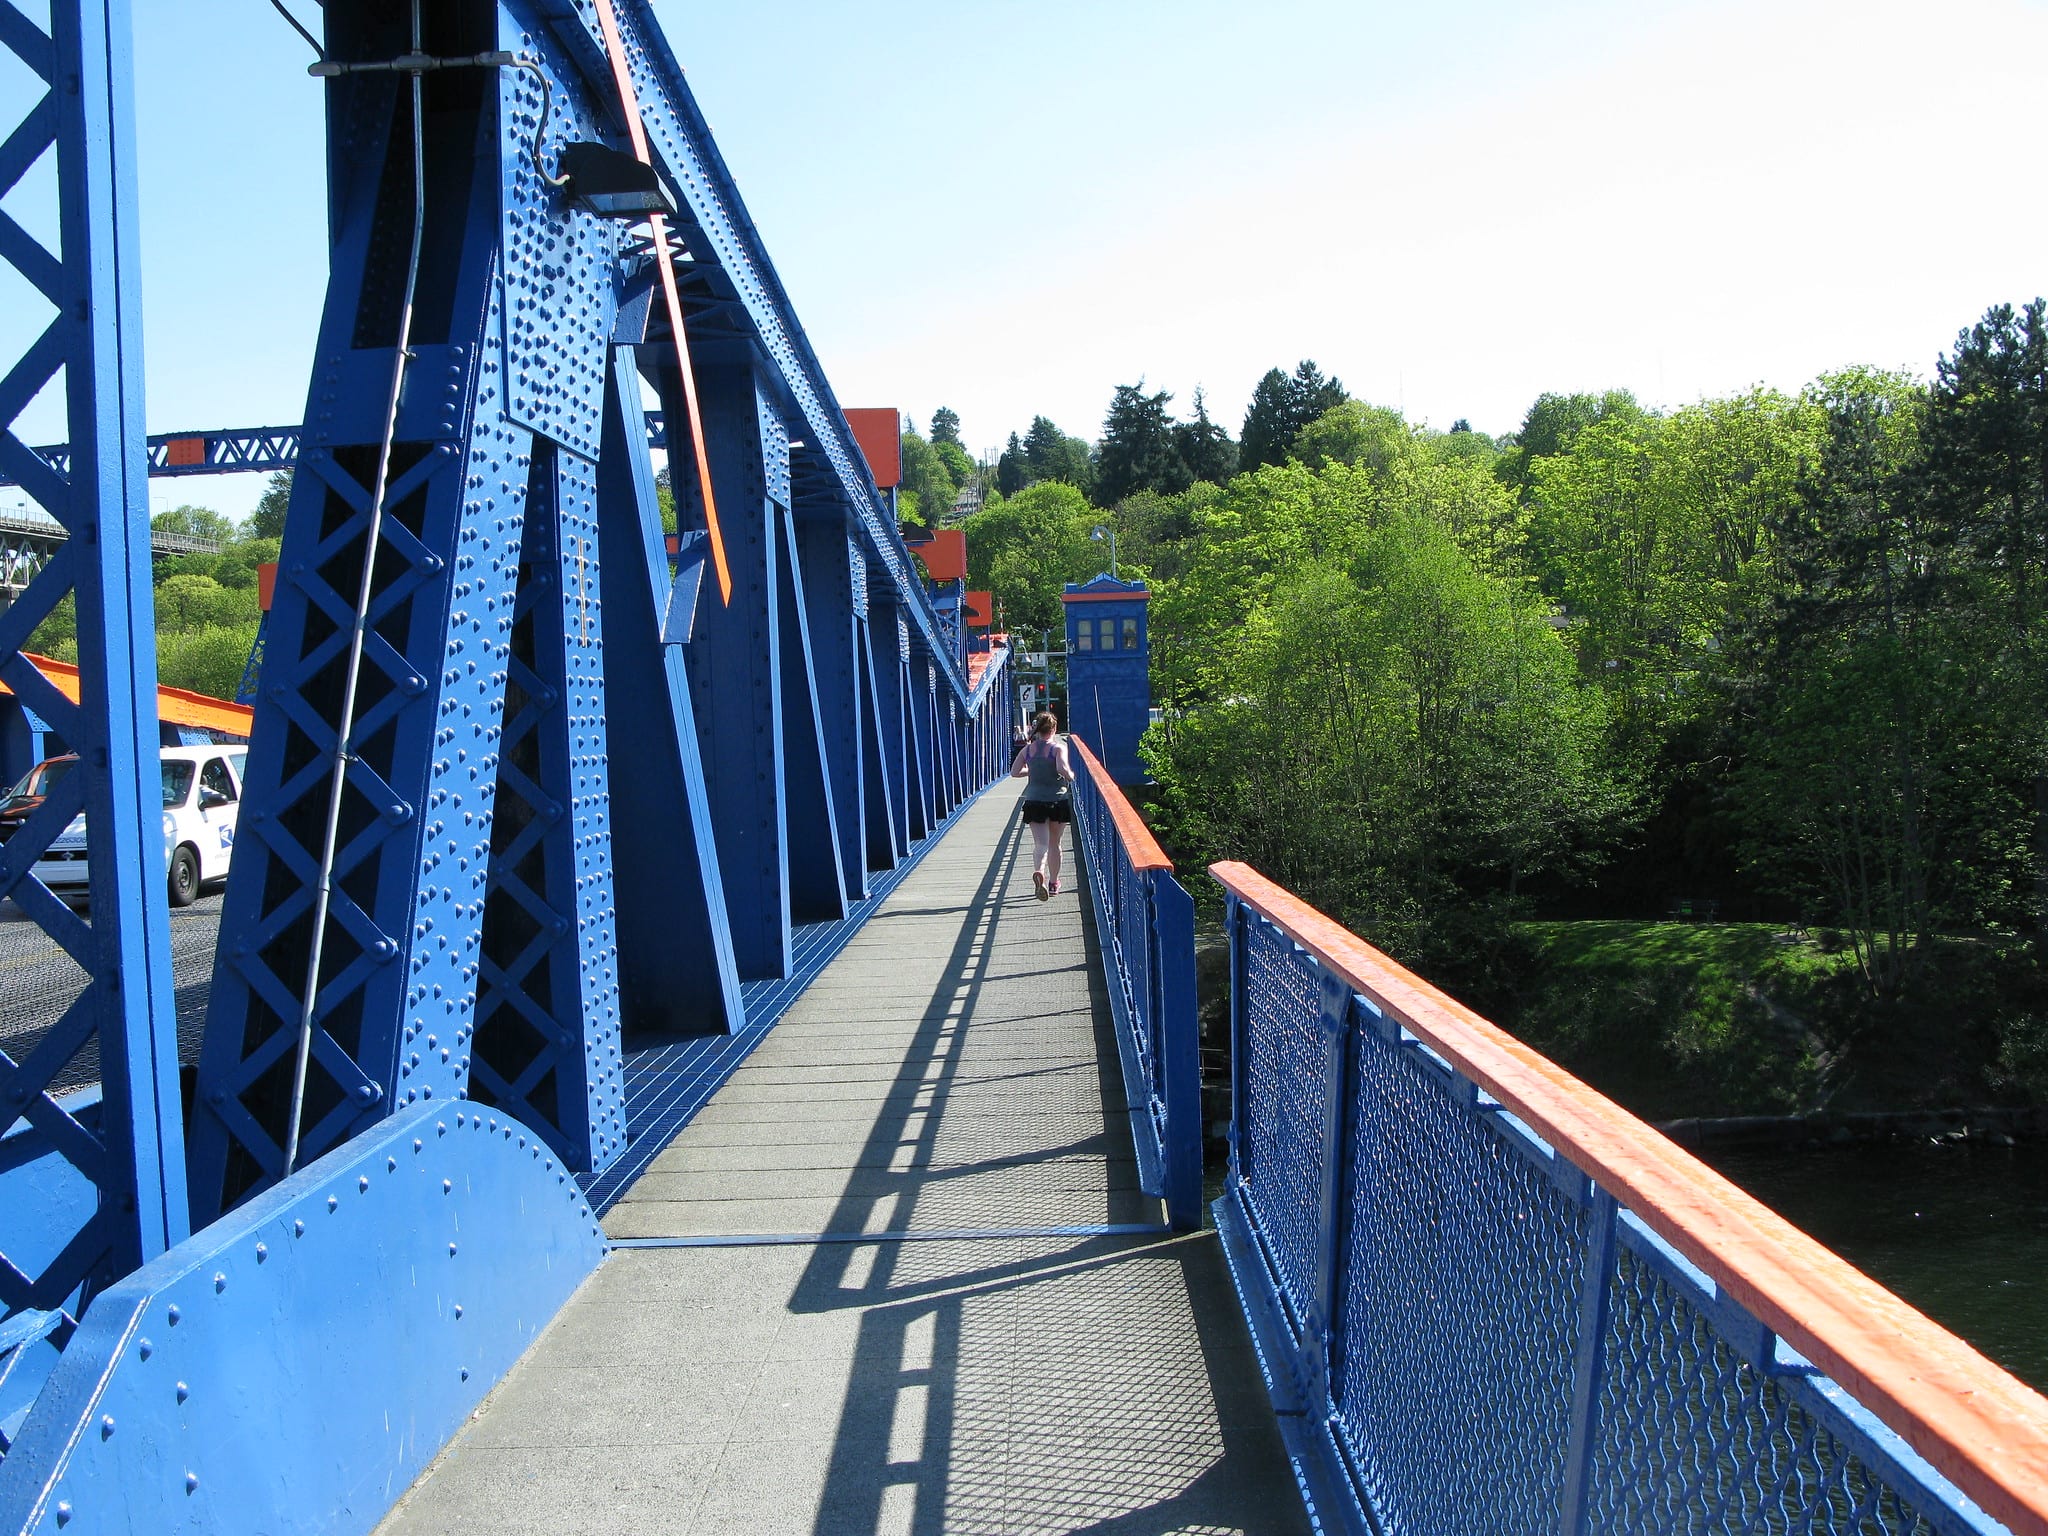 Walking path across the Fremont Bridge. One person is seen running across the bridge.